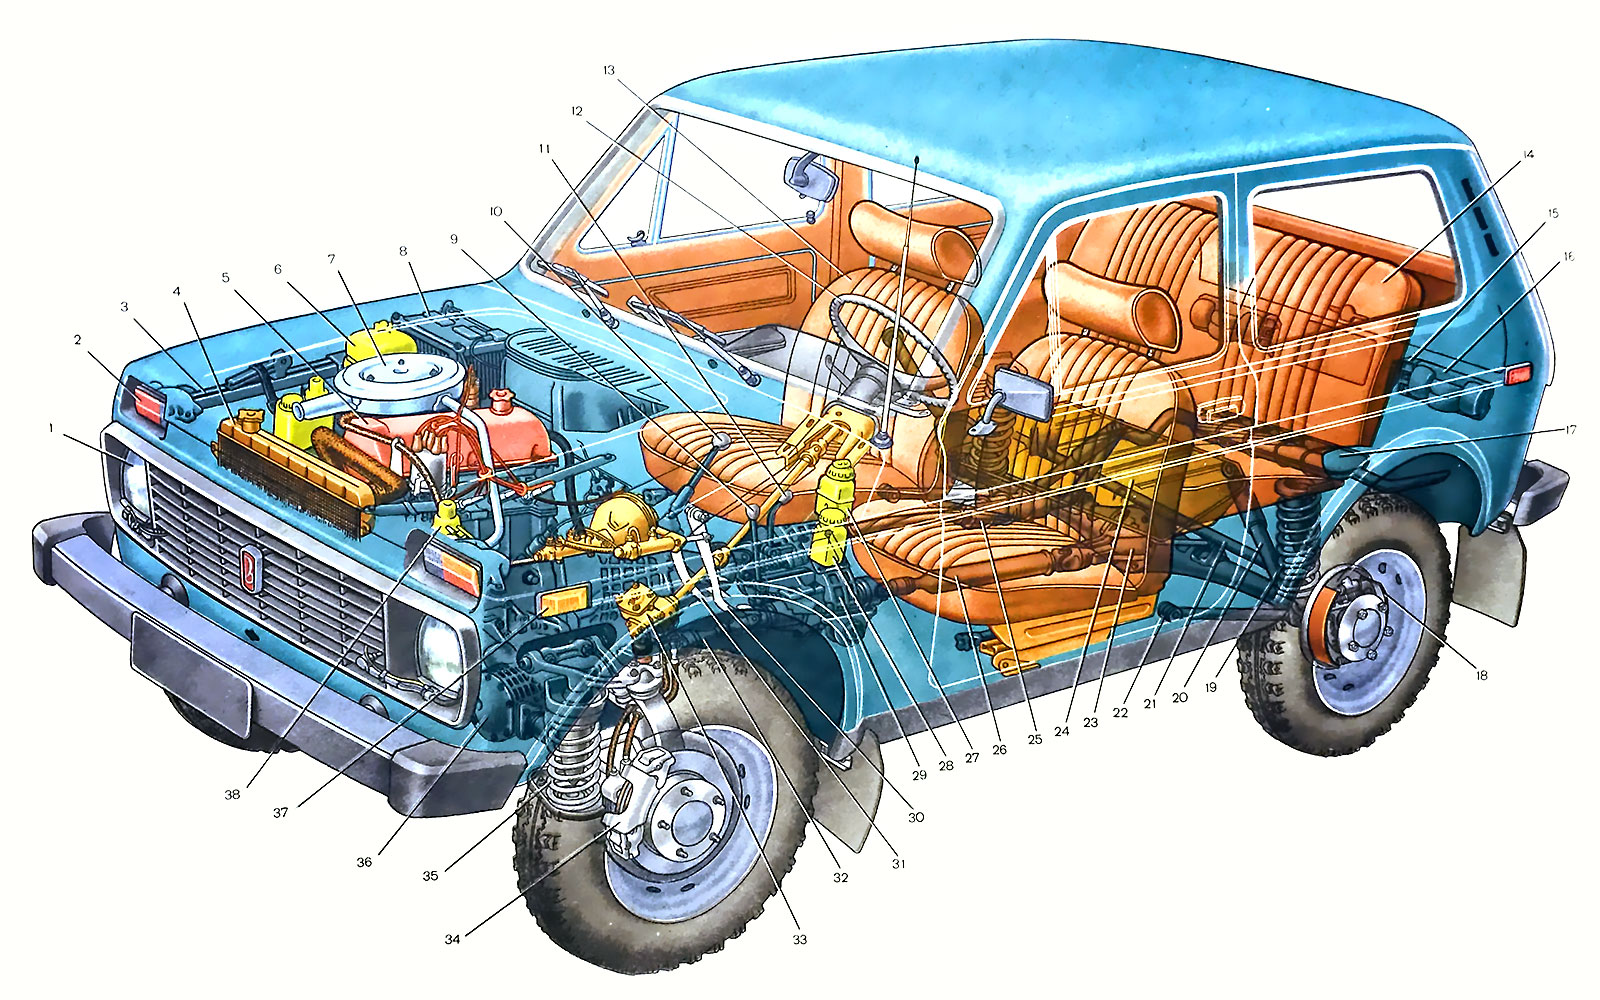 Нива (ВАЗ 2121) - кузовной ремонт и покраска автомобиля